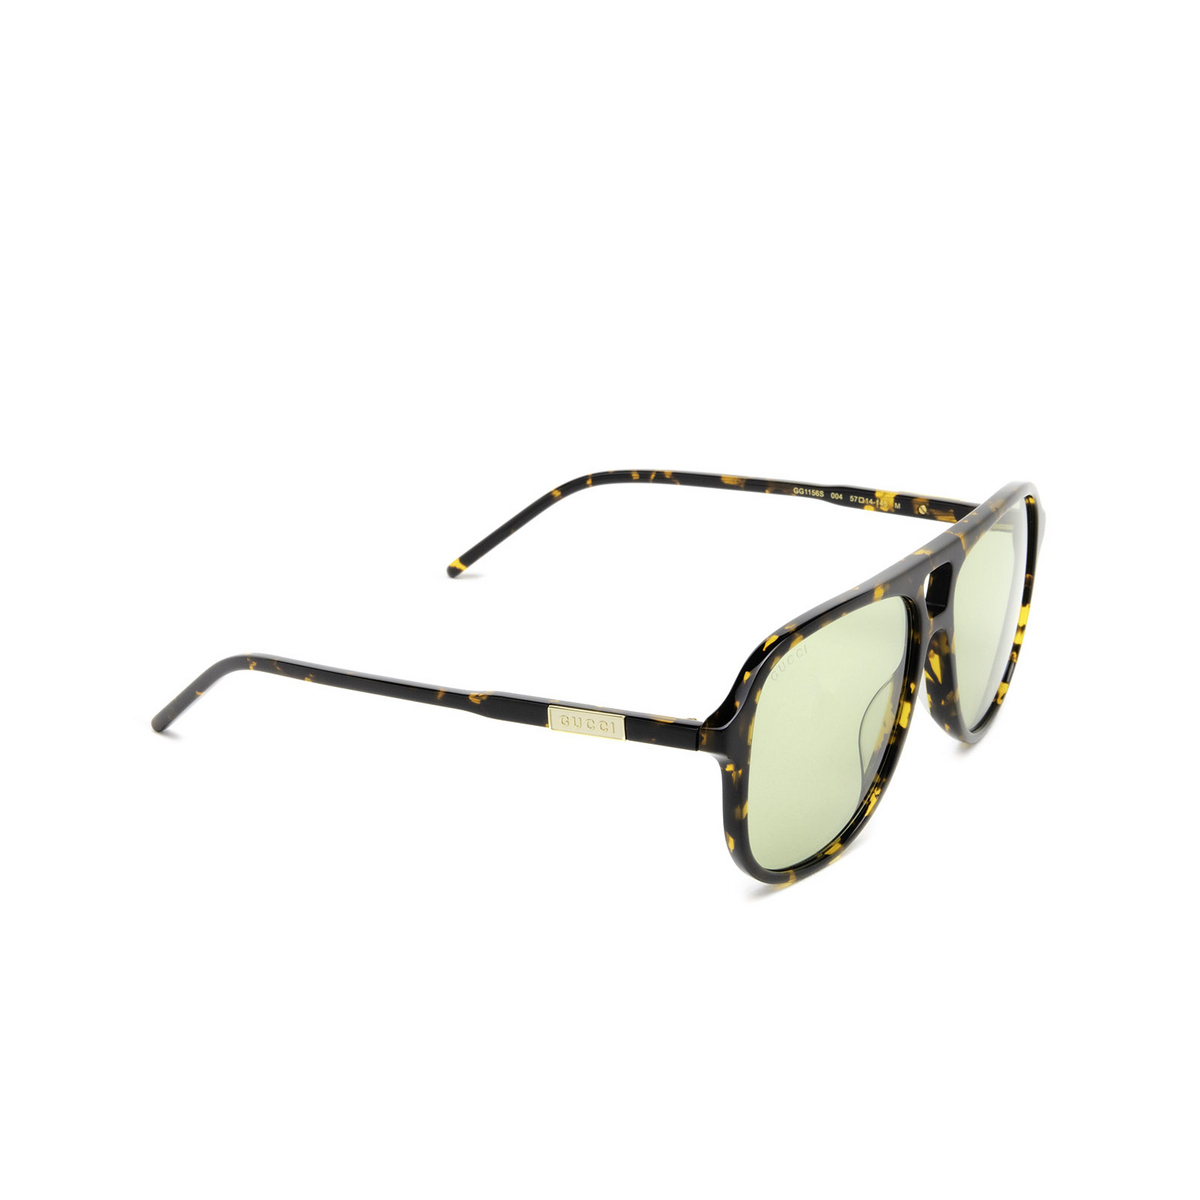 Gucci® Aviator Sunglasses: GG1156S color Havana 004 - three-quarters view.